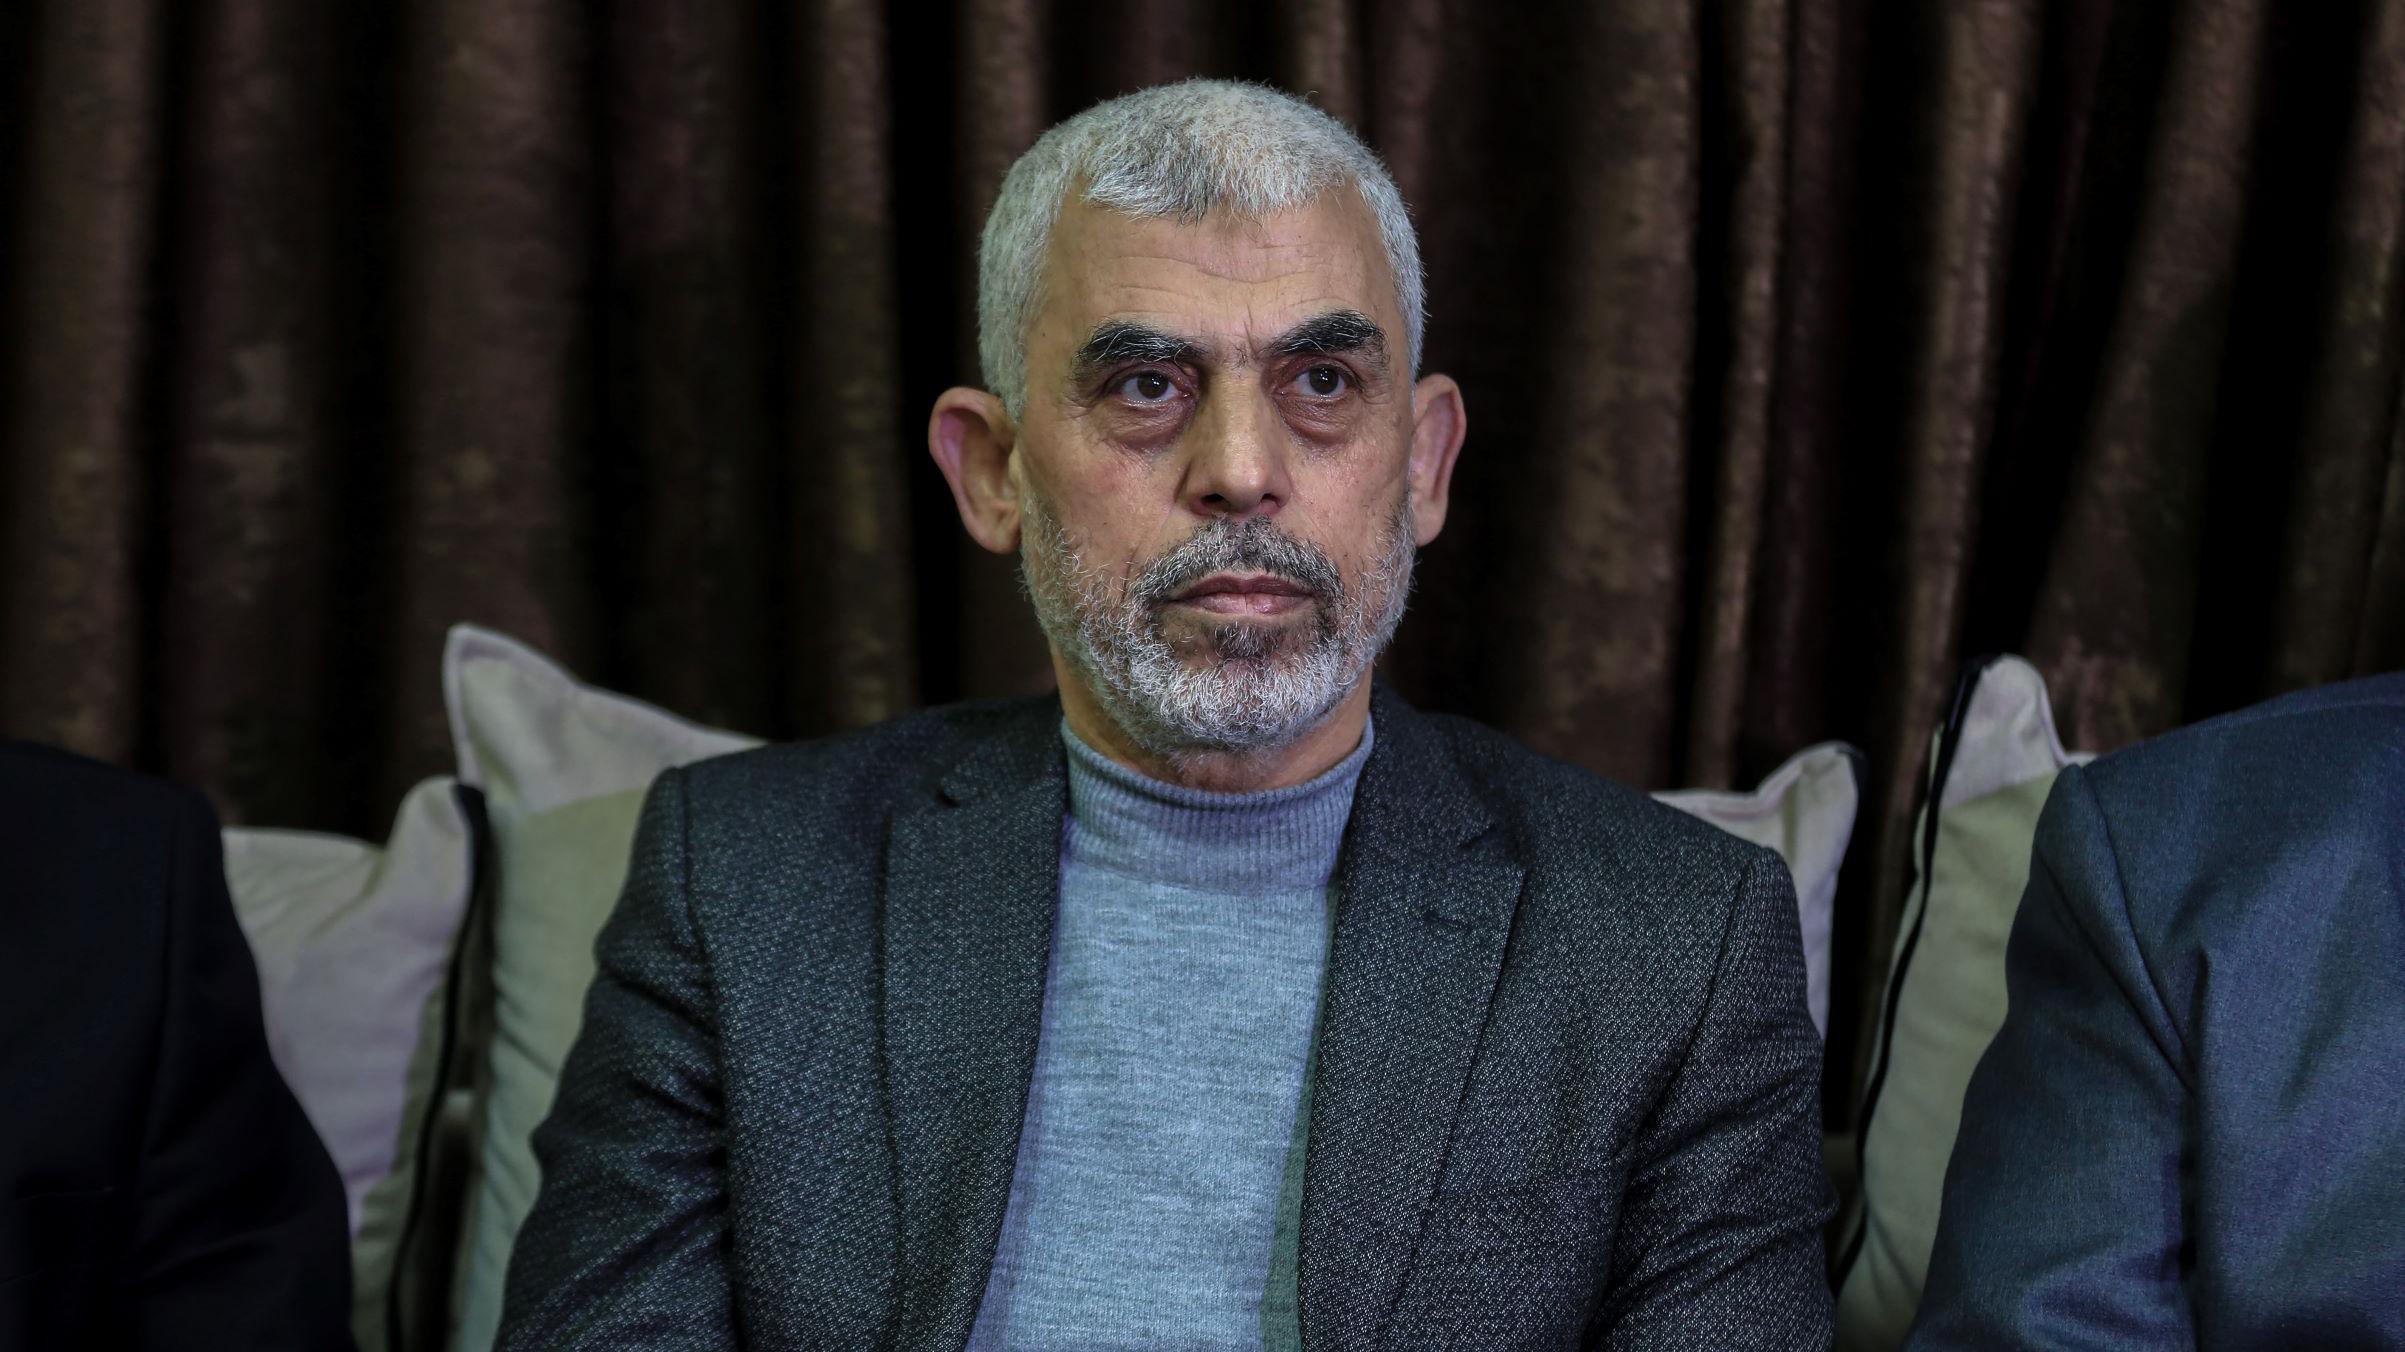 Hamas names Yahya Sinwar as new overall leader